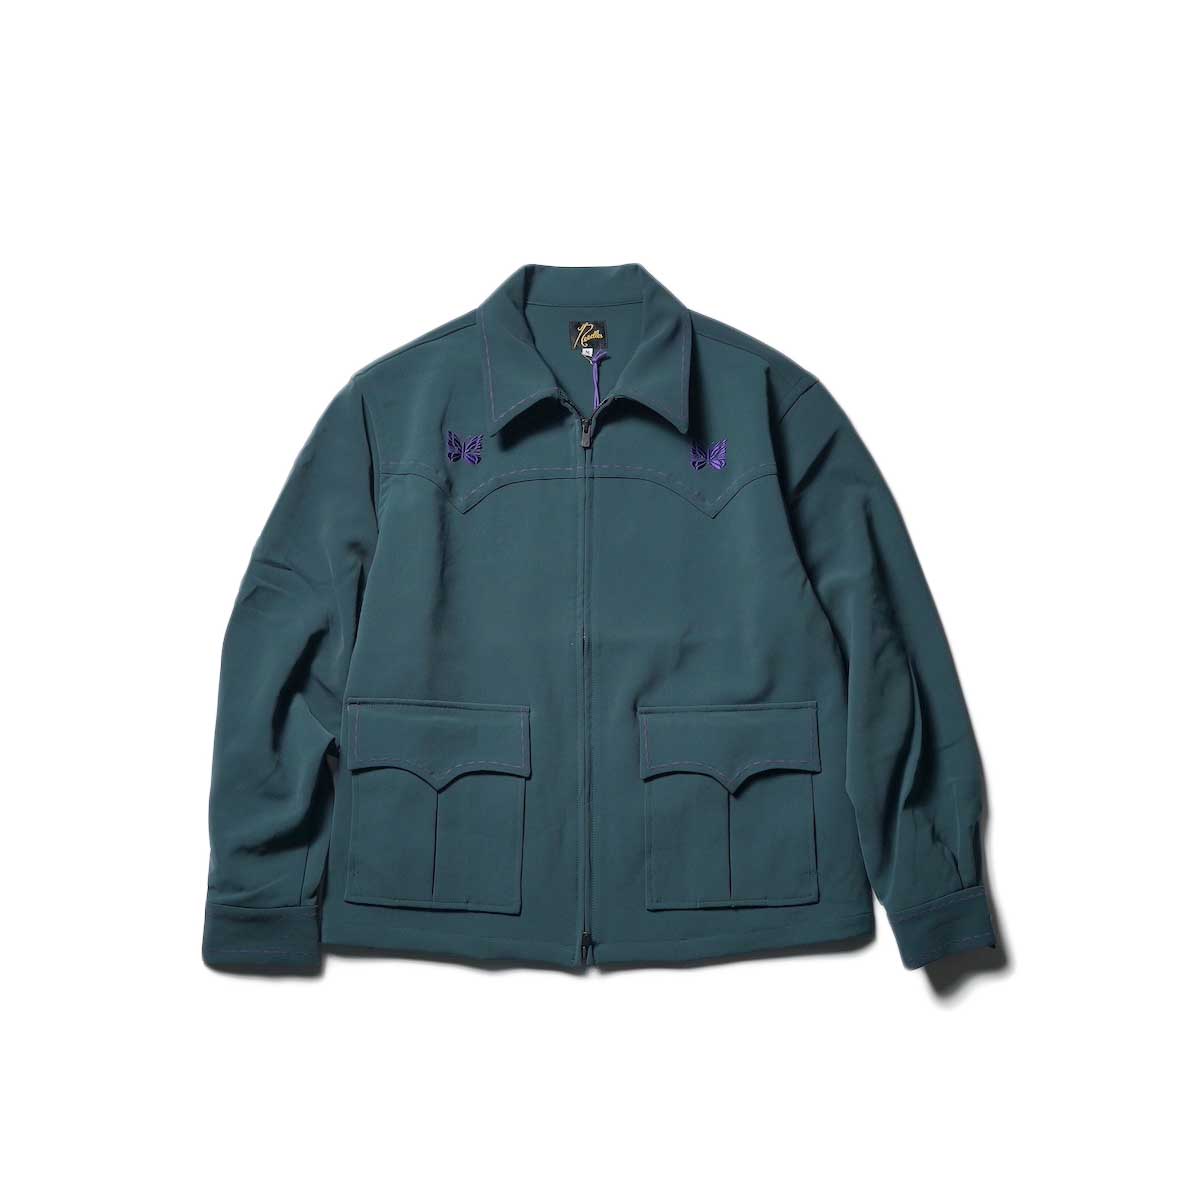 Needles / Western Sport Jacket - PE/PU Double Cloth  (Green)